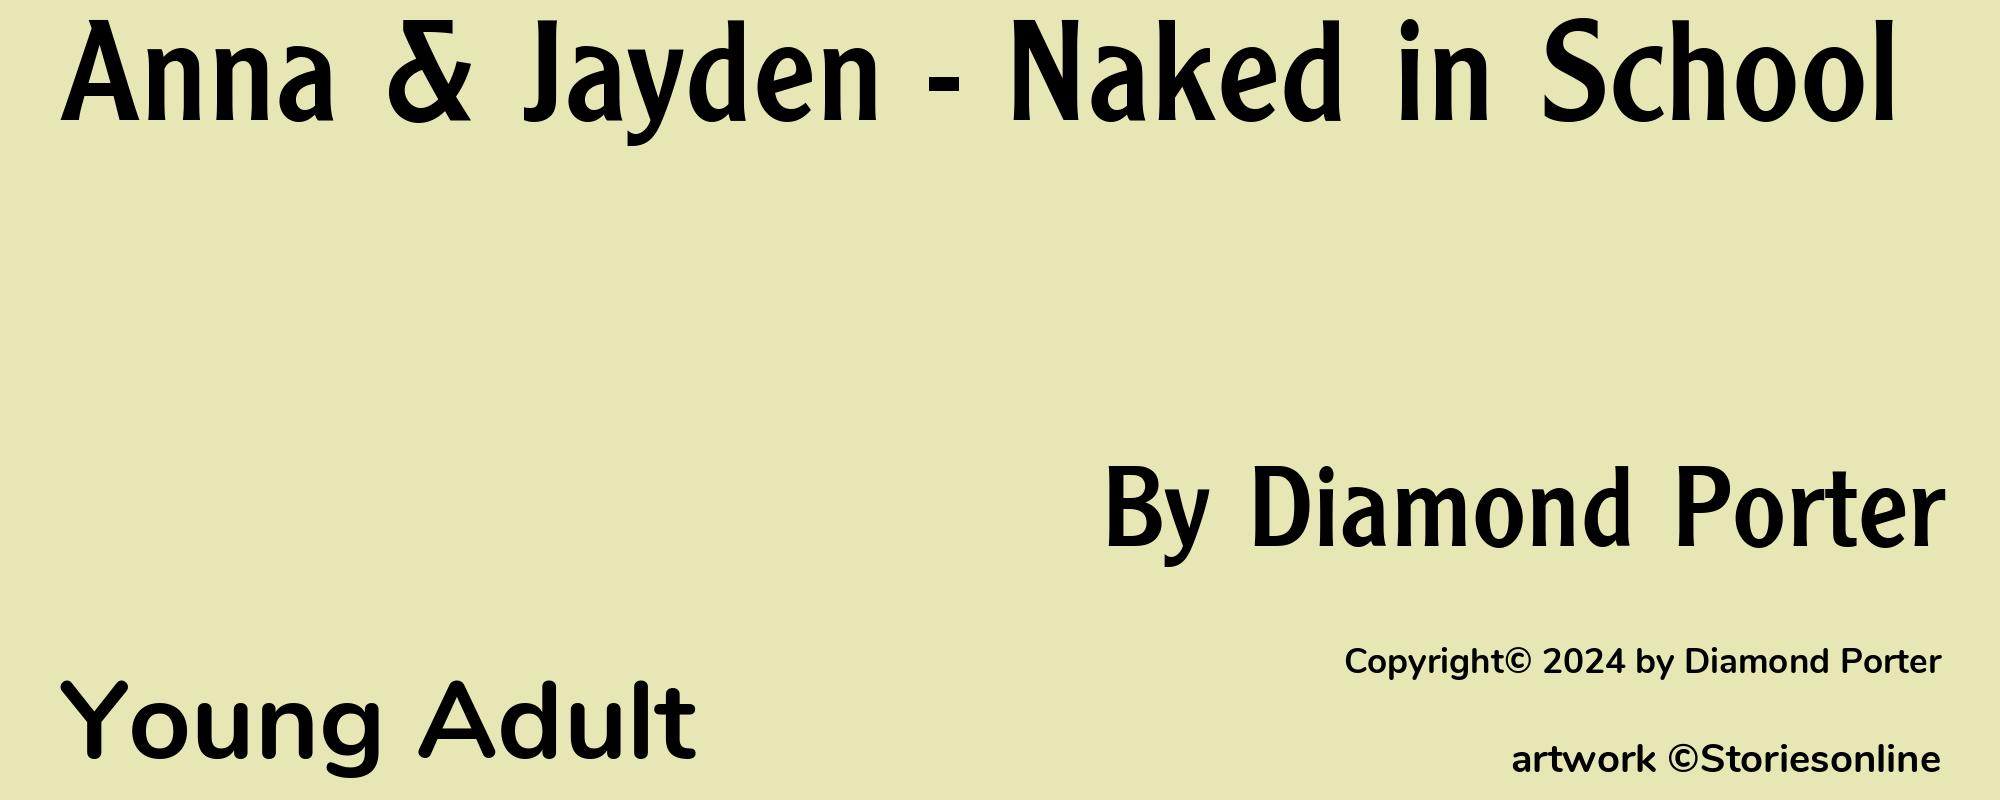 Anna & Jayden - Naked in School - Cover